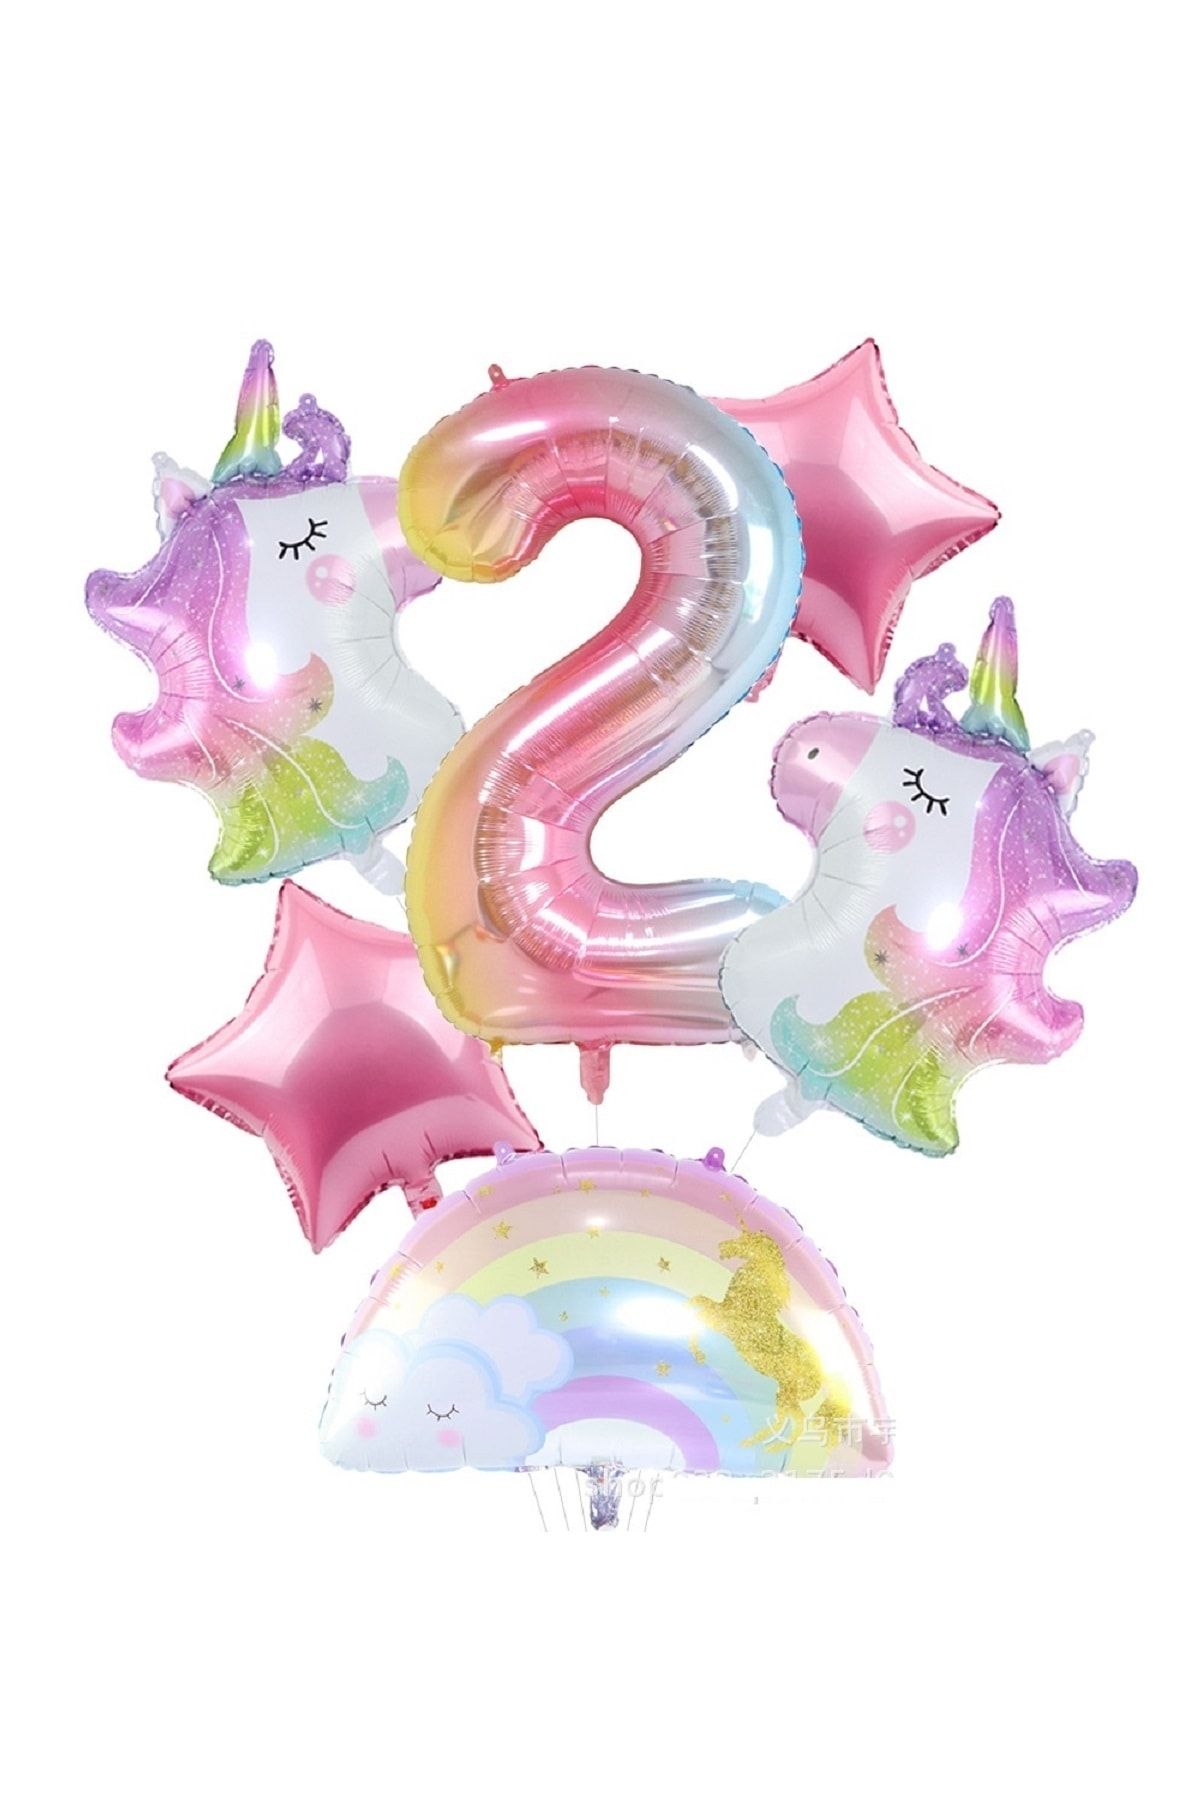 PartiMix Sevimli Unicorn Konsepti 2 Yaş Kız Çocuk Doğum Günü Parti Süsü Balon Seti Folyo Balonları